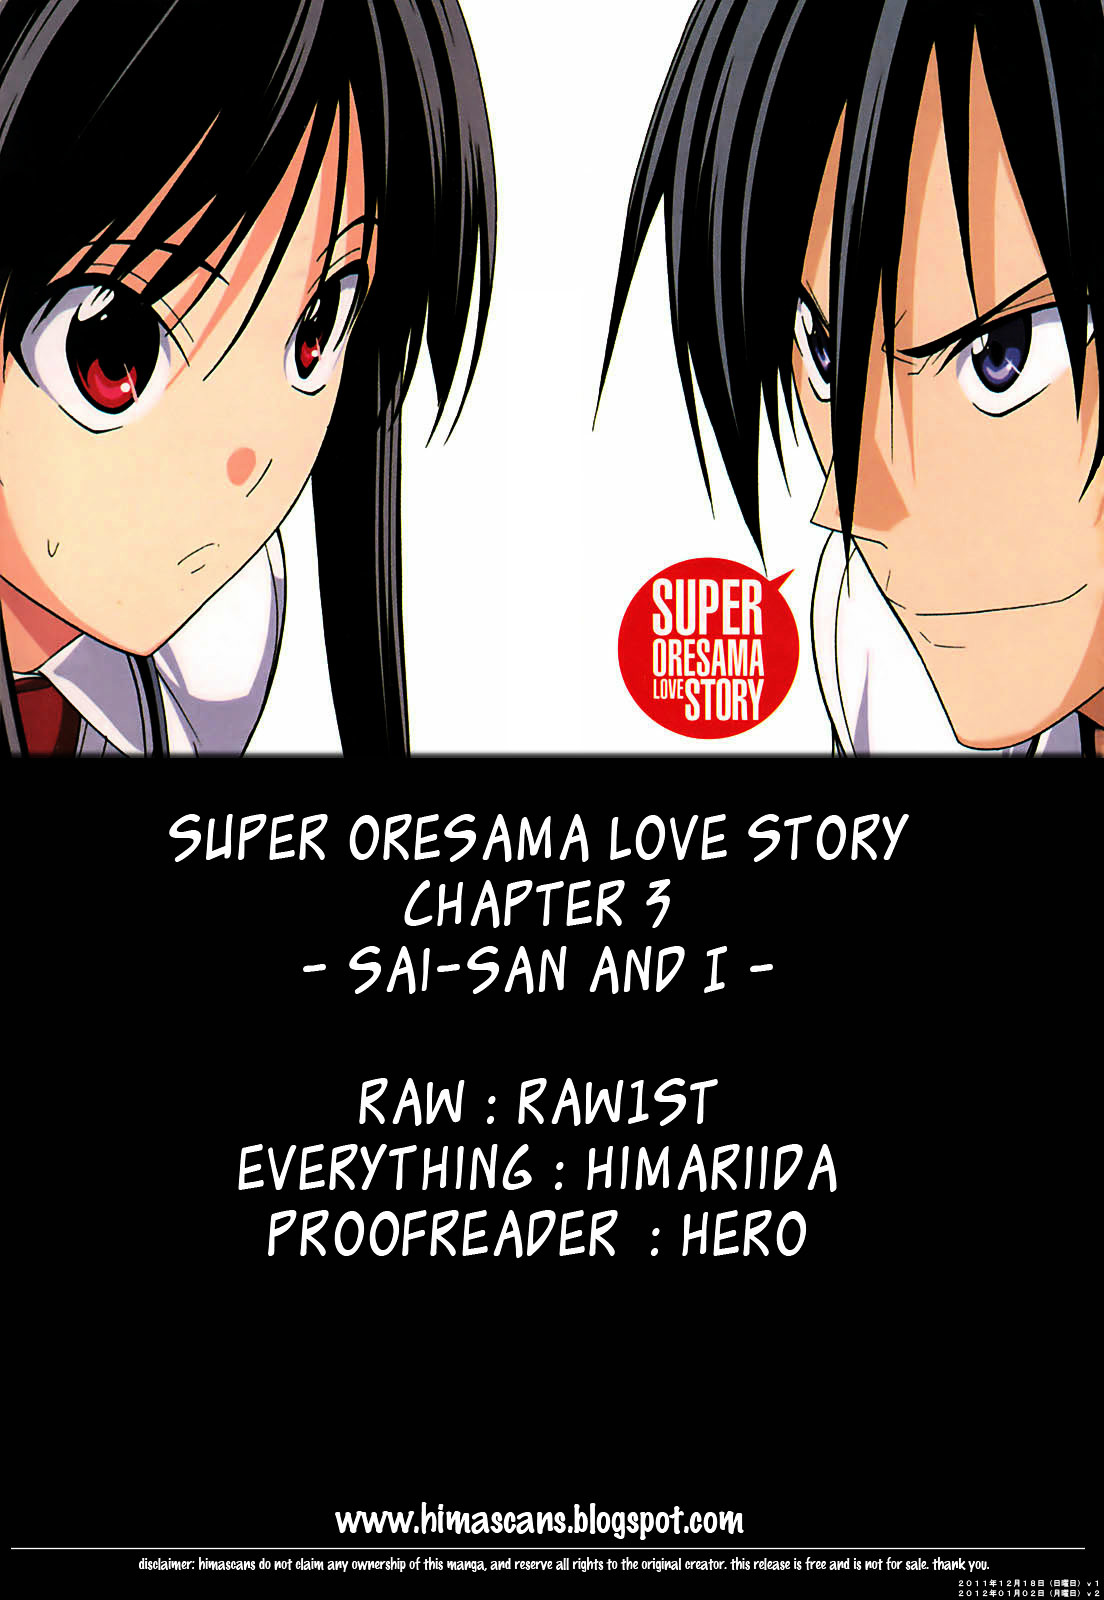 Super Oresama Love Story Vol.1 Chapter 3V2 : Sai-San And I - Picture 1